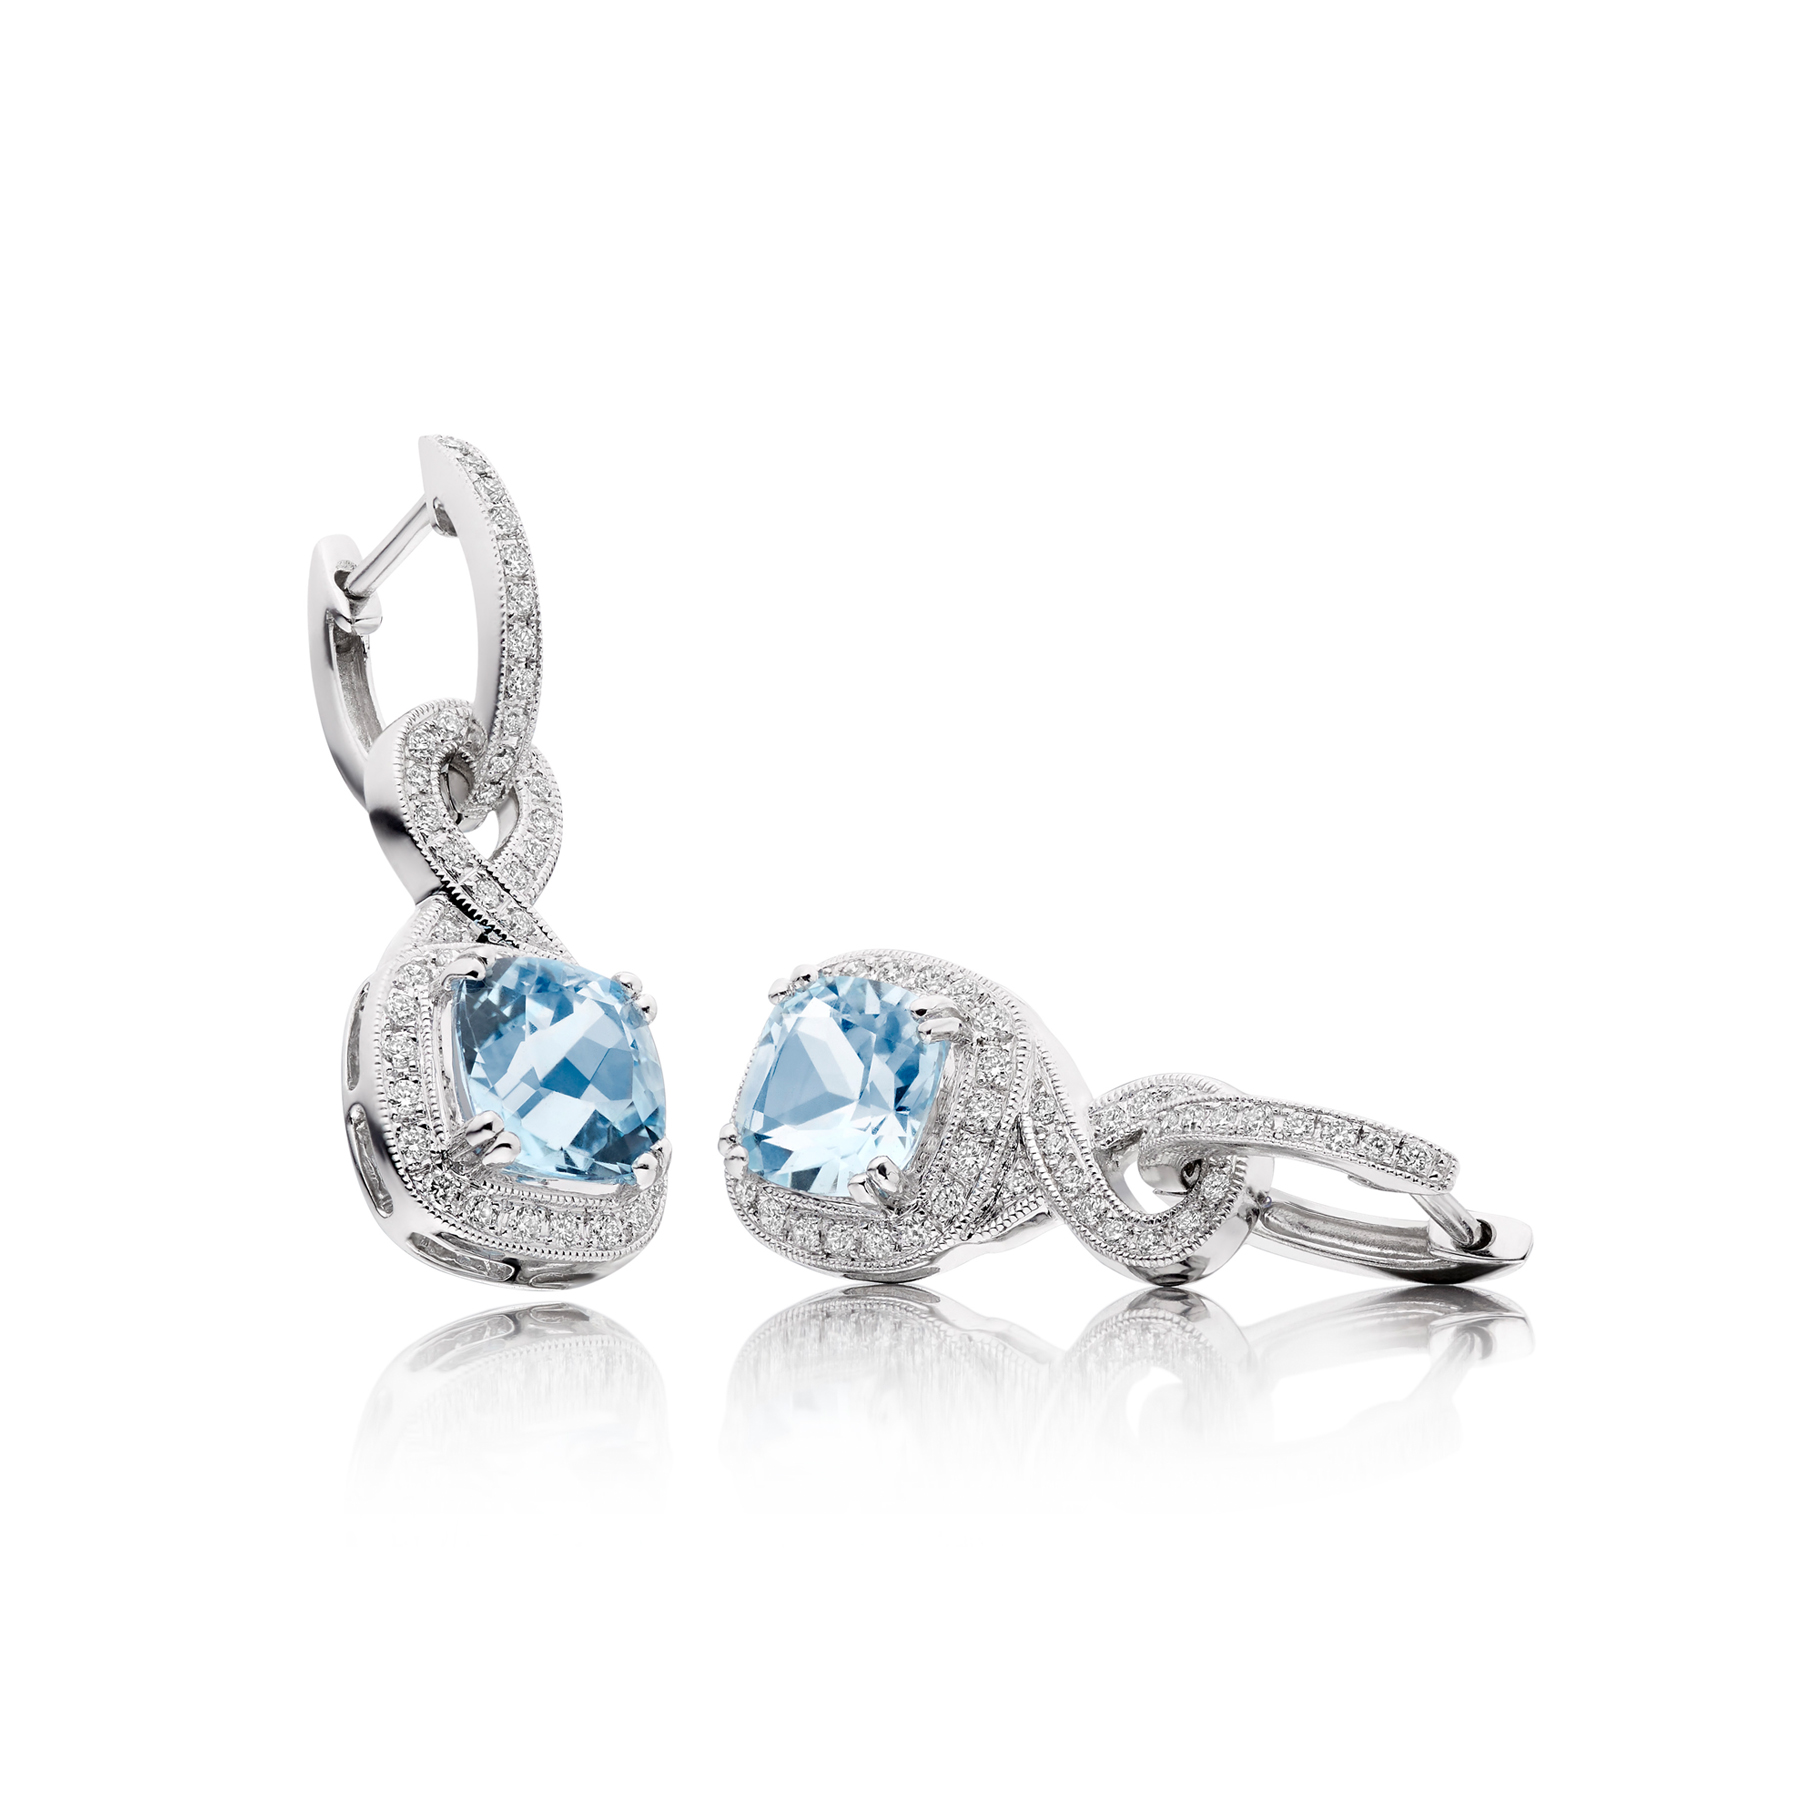 Cushion-cut aquamarine and diamond drop earrings